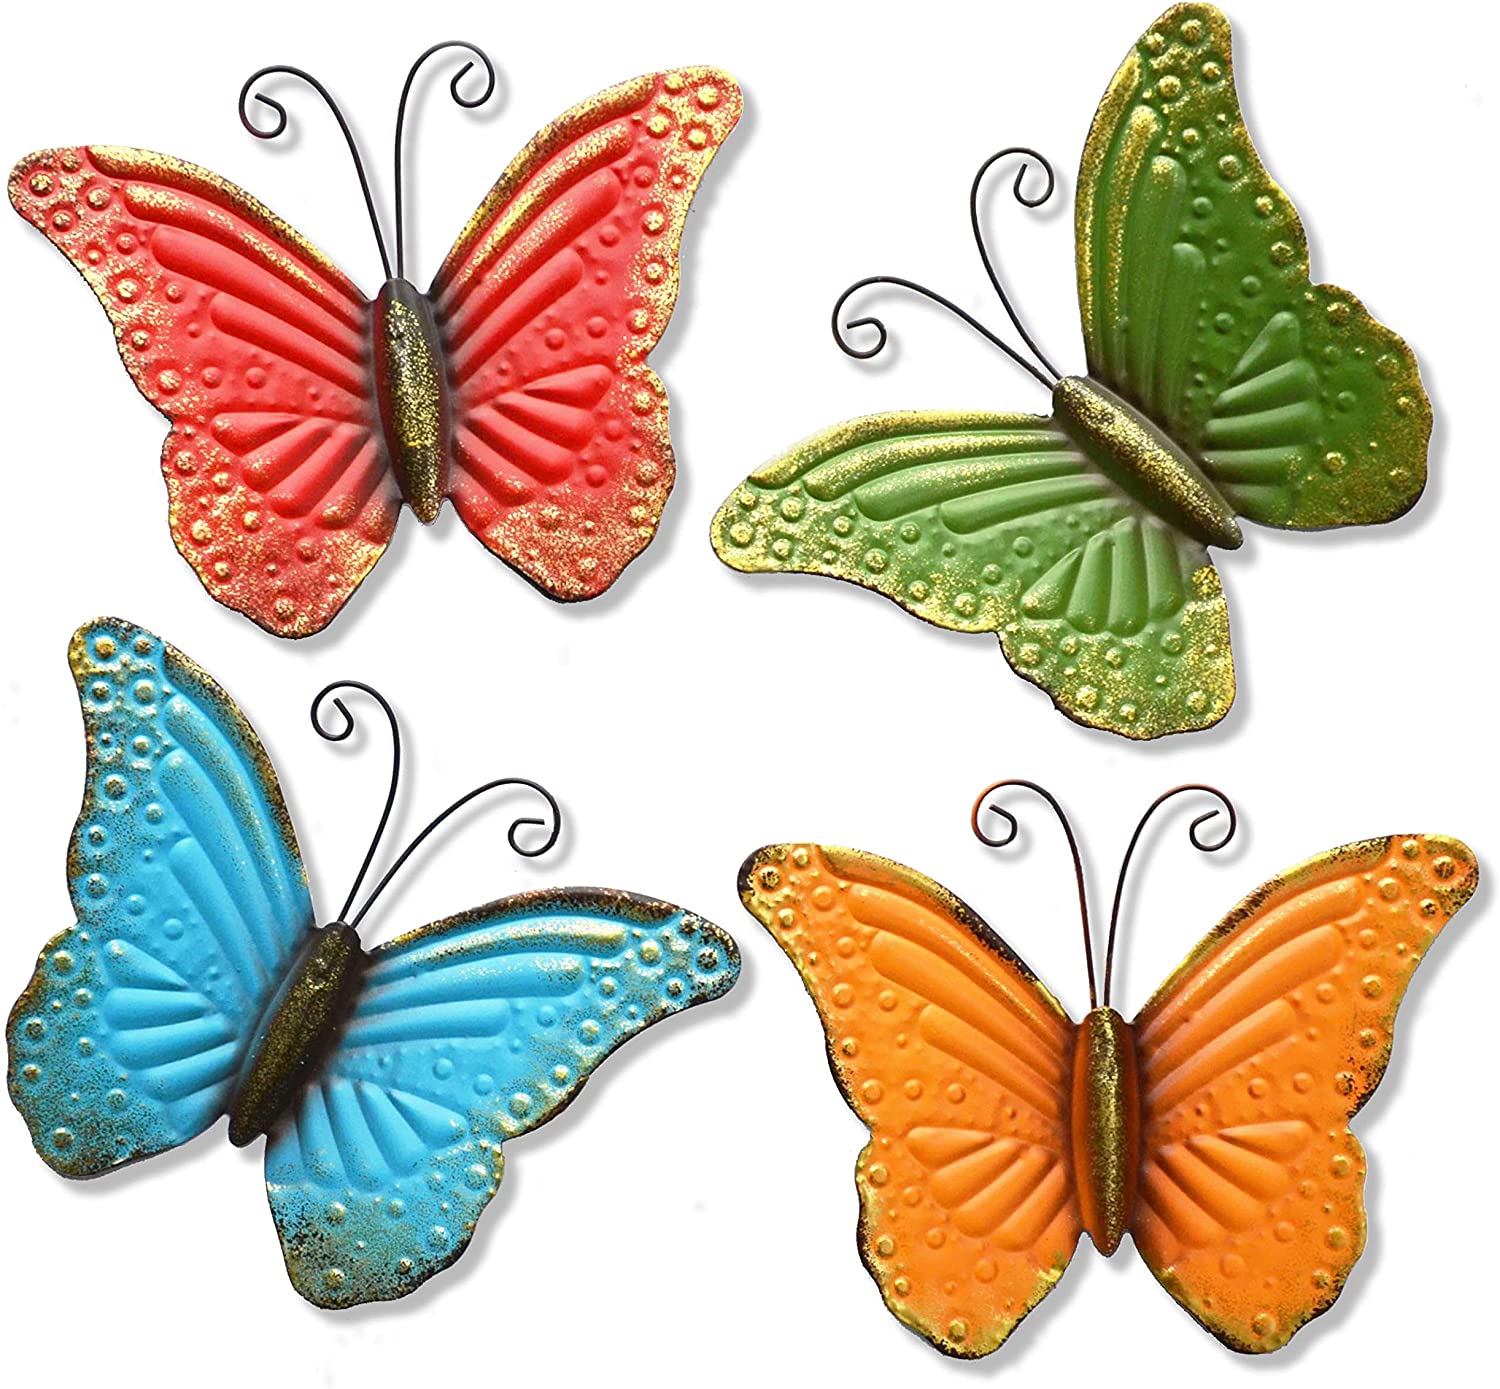 Metal Butterfly Wall Art Decor Set of 4 Colorful Garden Wall Sculptures